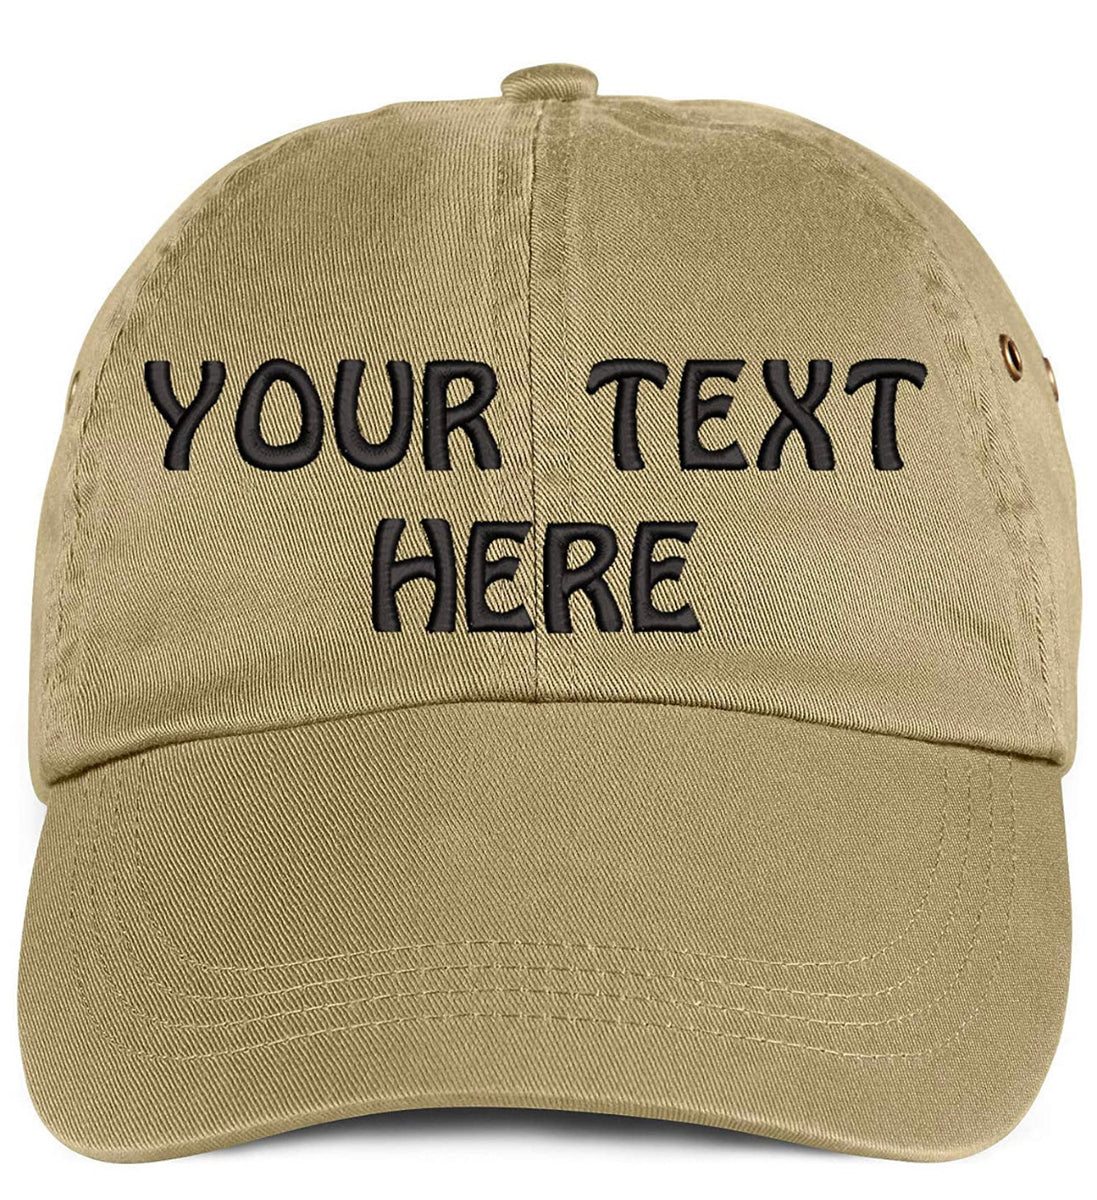 Custom Soft Baseball Cap Skid Steer Embroidery Dad Hats for Men & Women